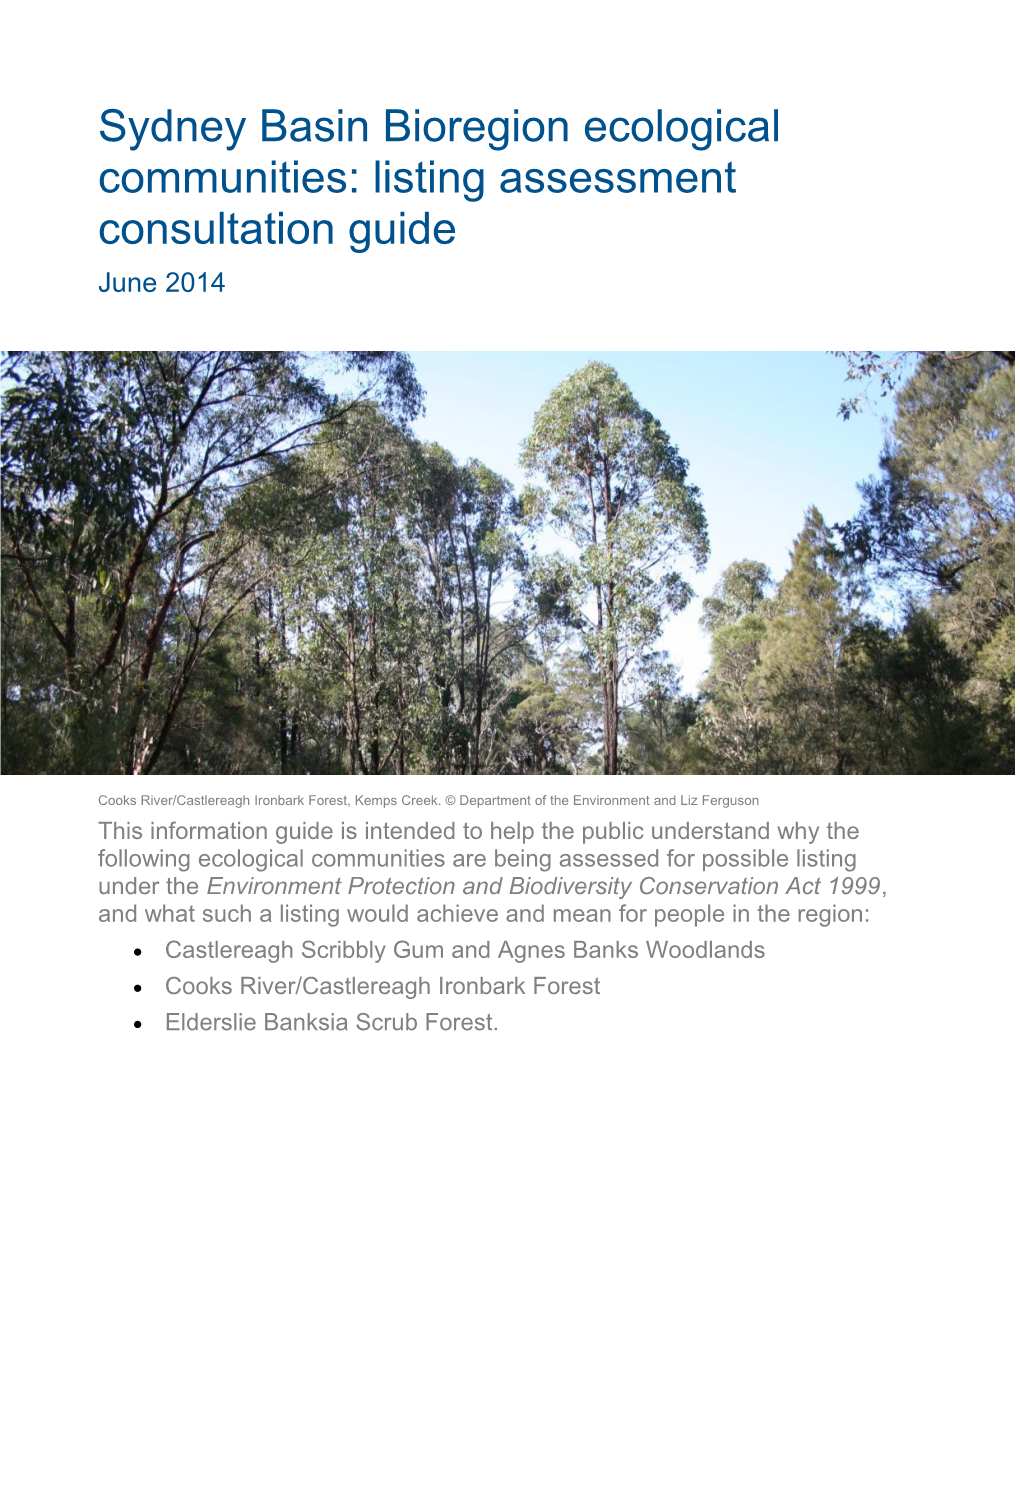 Sydney Basin Bioregion Ecological Communities: Listing Assessment Consultation Guide